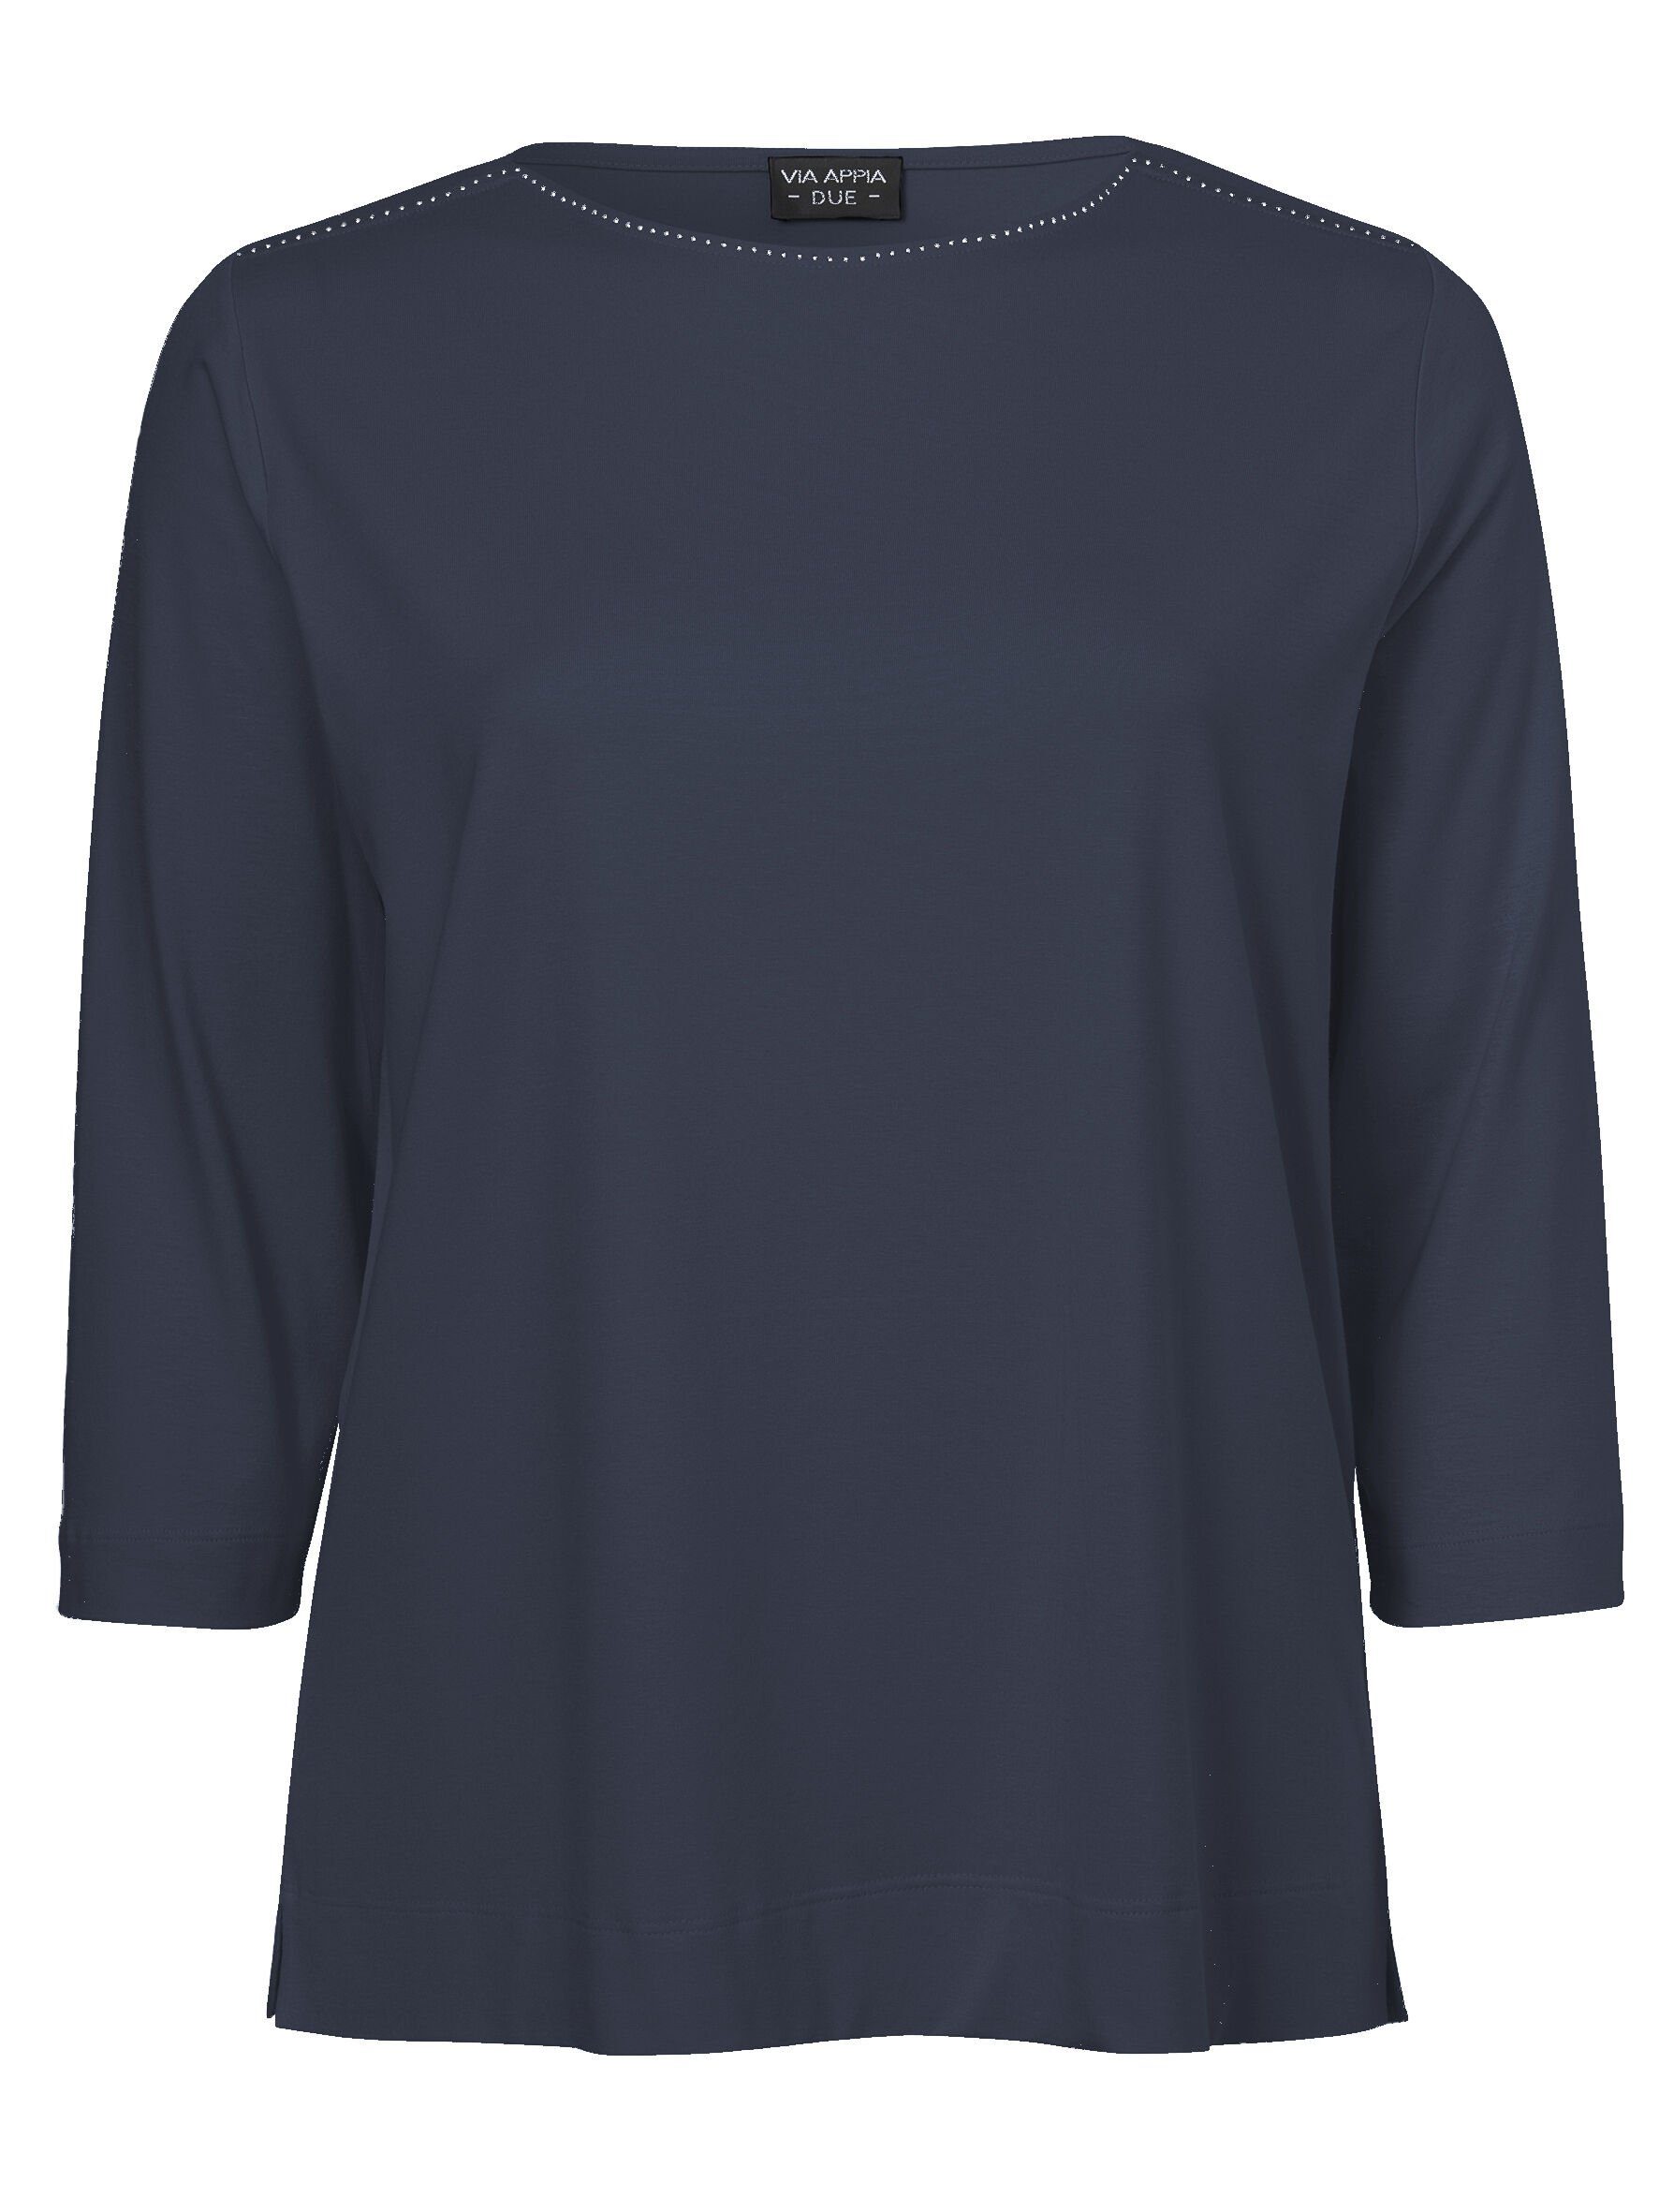 VIA APPIA DUE Sweatshirt Dezentes 3/4-Arm-Shirt in unifarbenem Stil